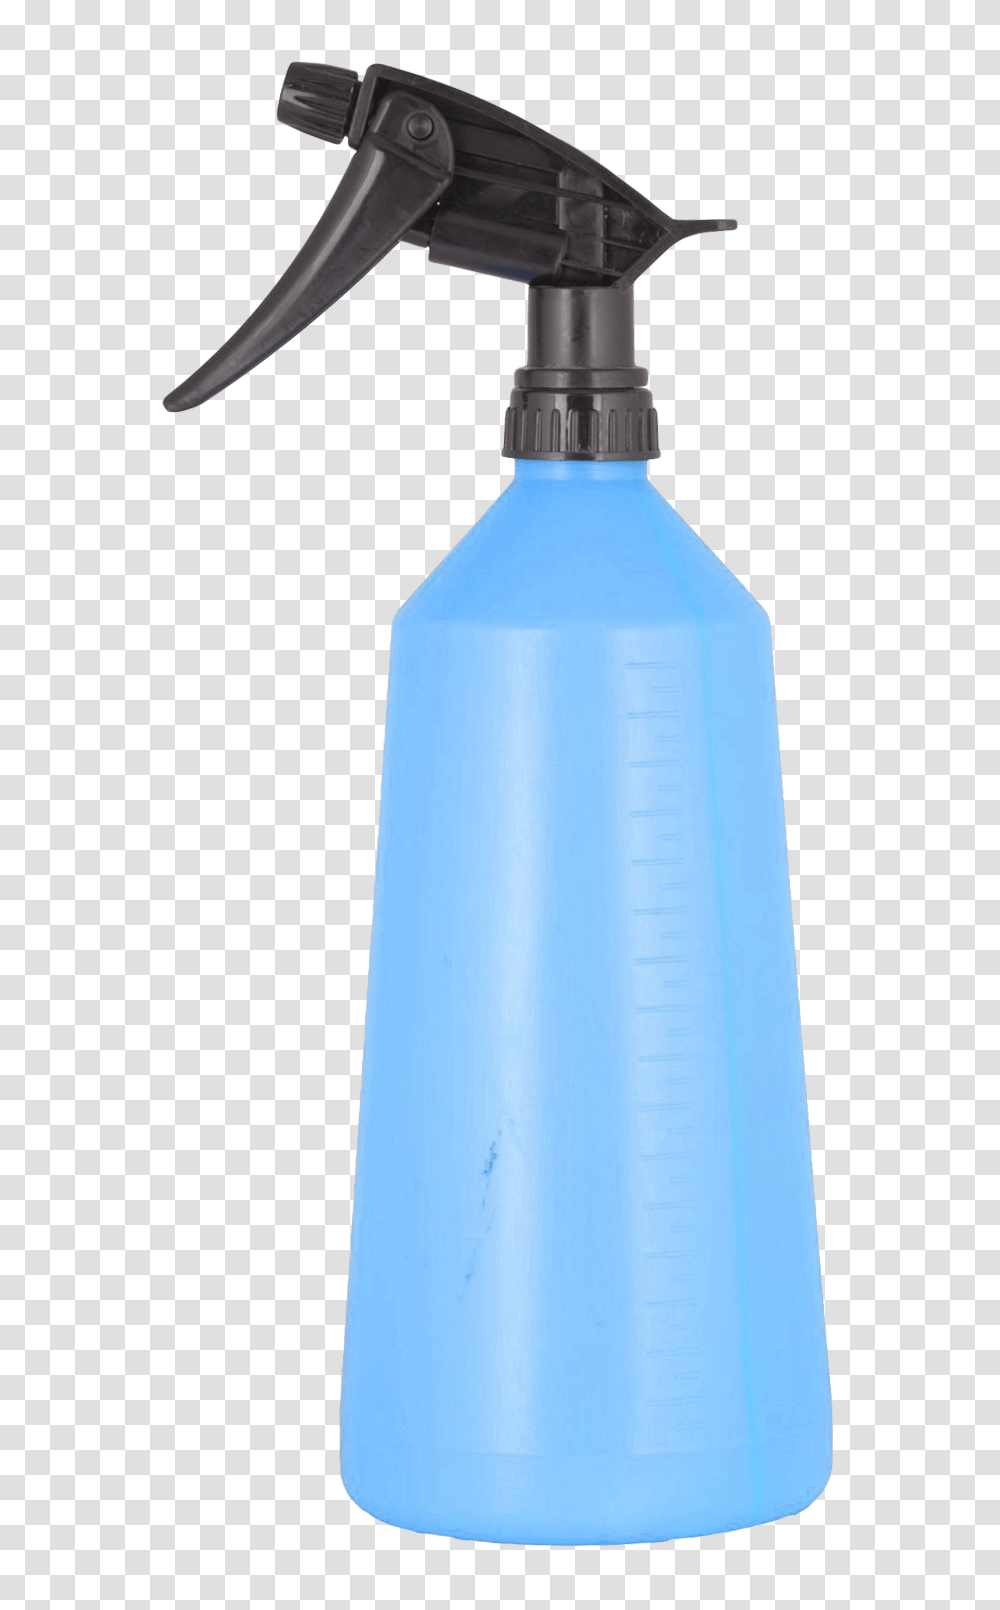 Spray Bottle Image, Cylinder, Lighting, Light Fixture, Spray Can Transparent Png